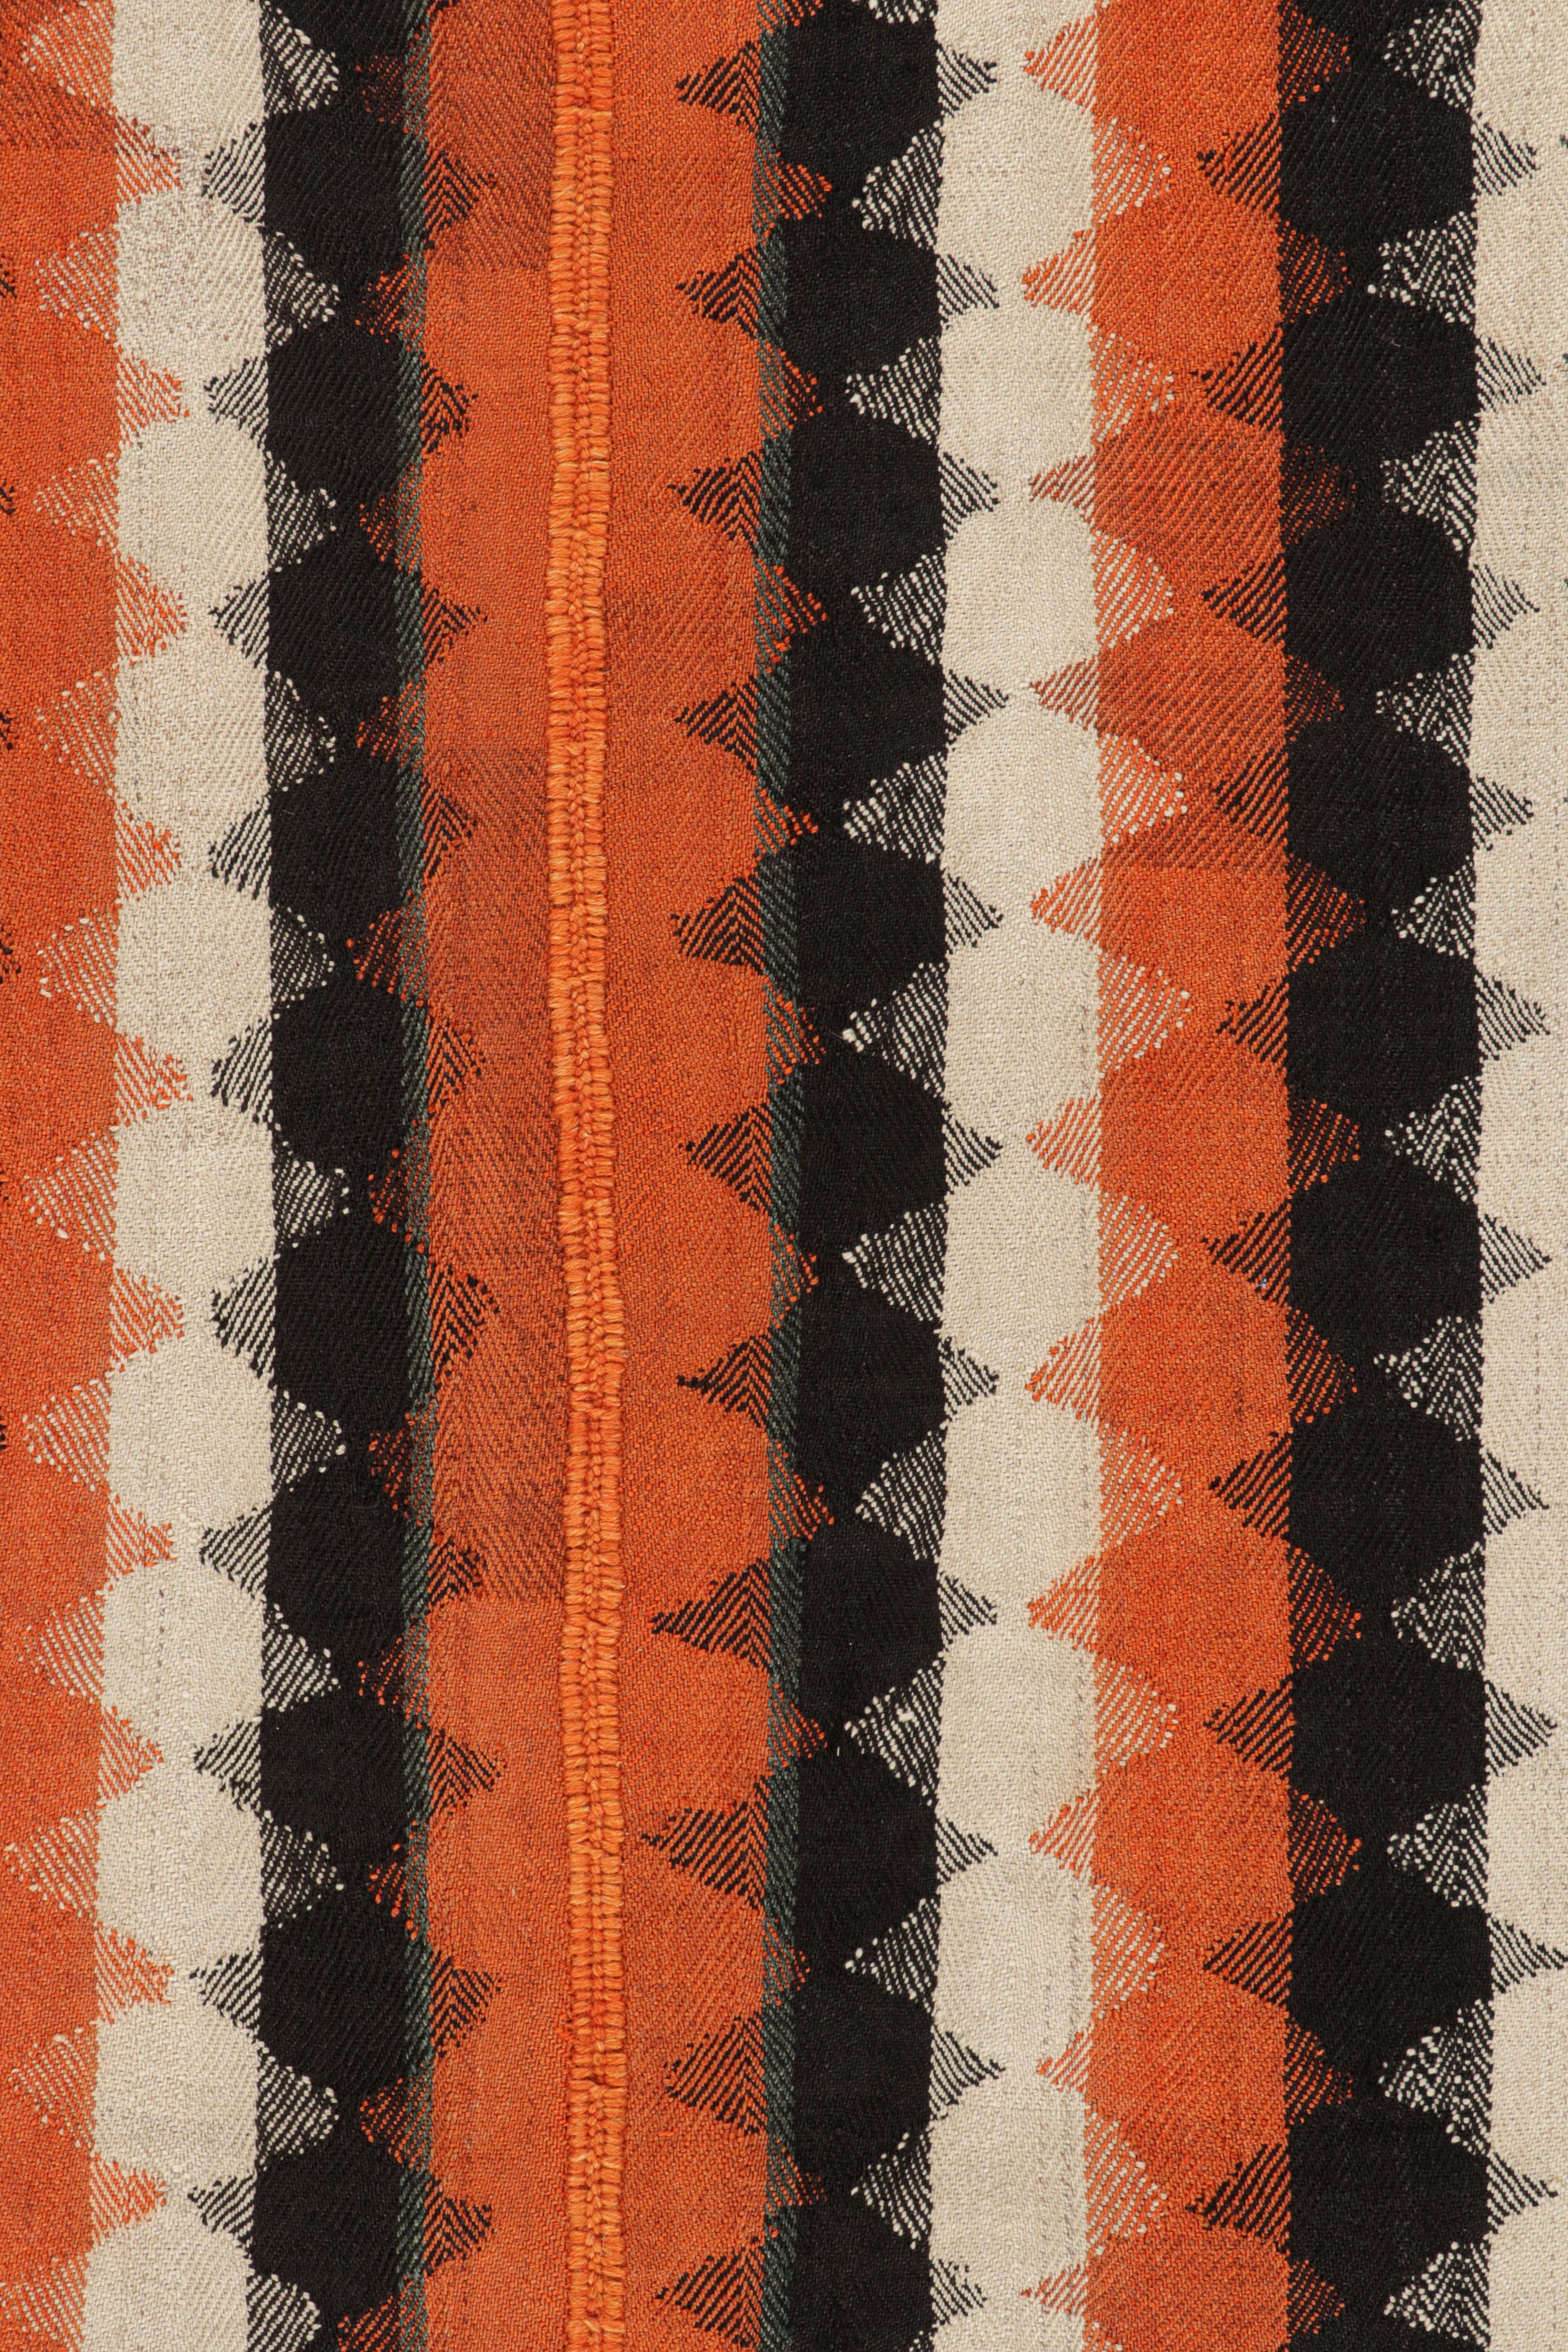 Tribal Vintage Persian Kilim in Orange and Multicolor Stripes For Sale